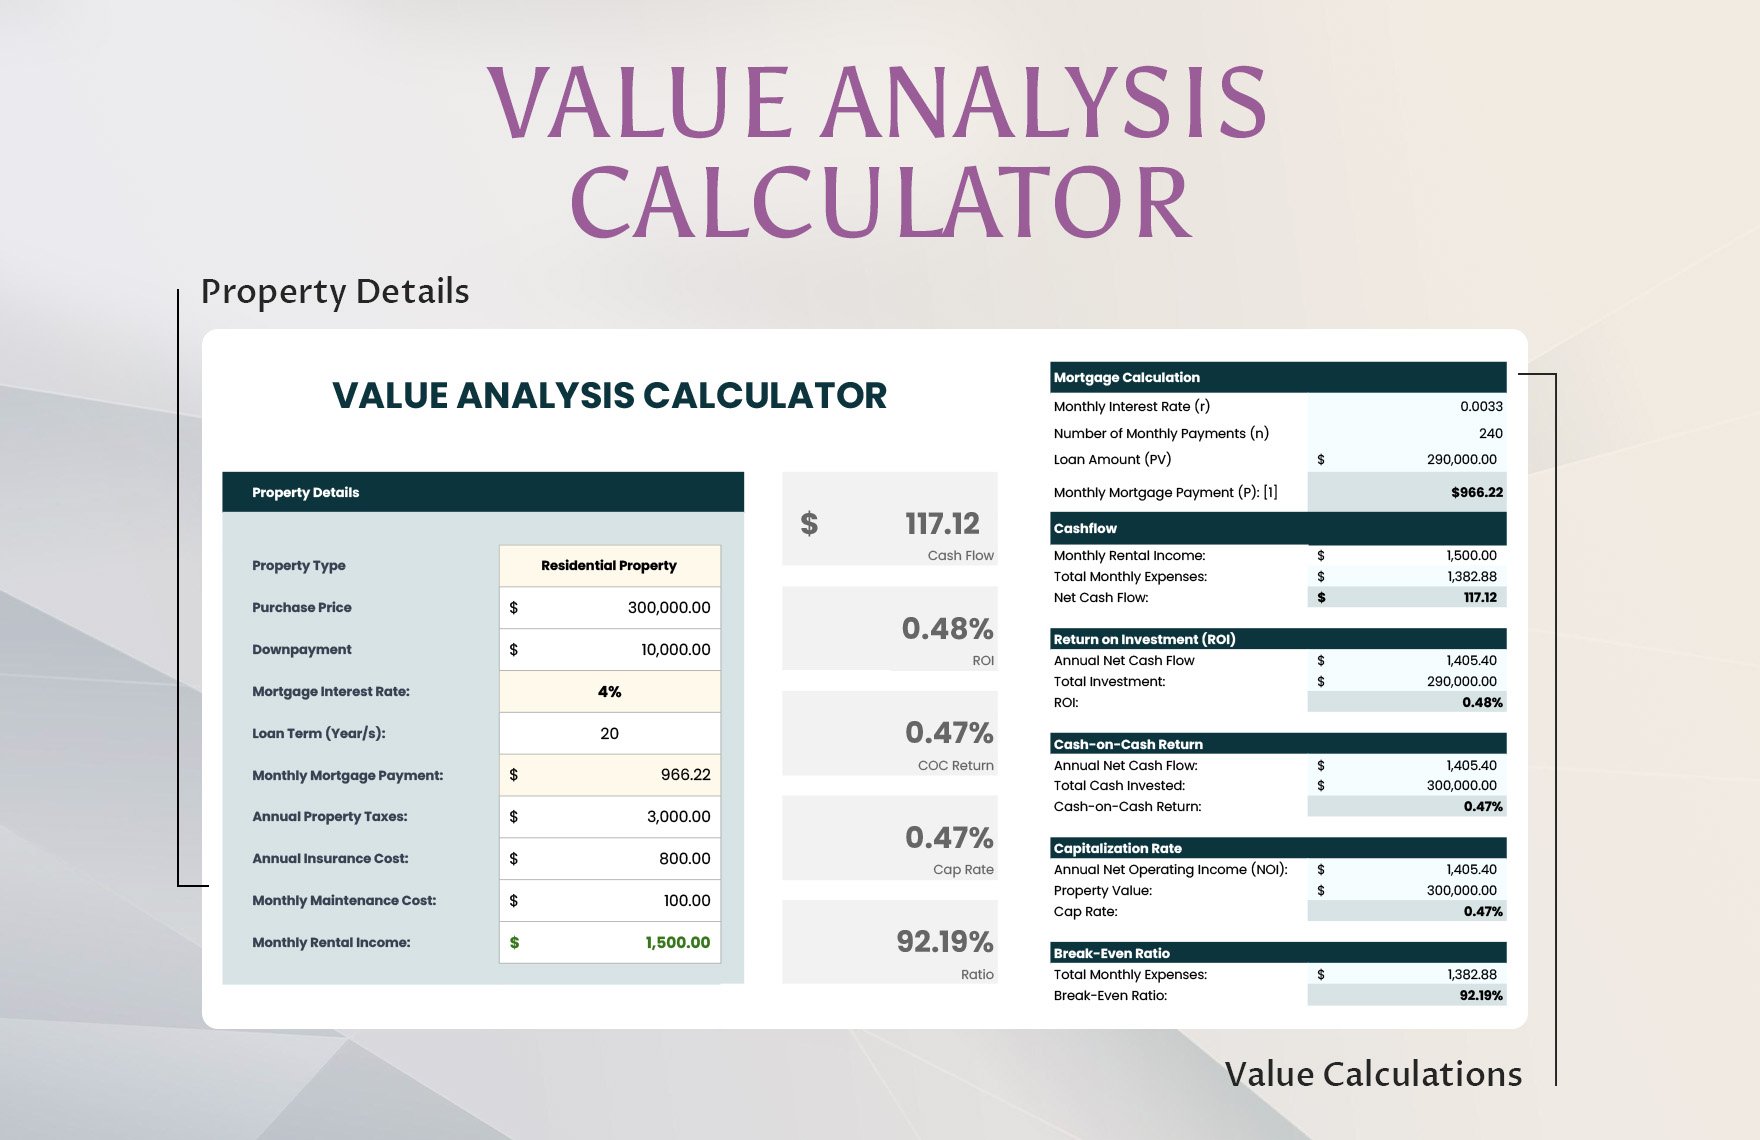 Value Analysis Calculator Template